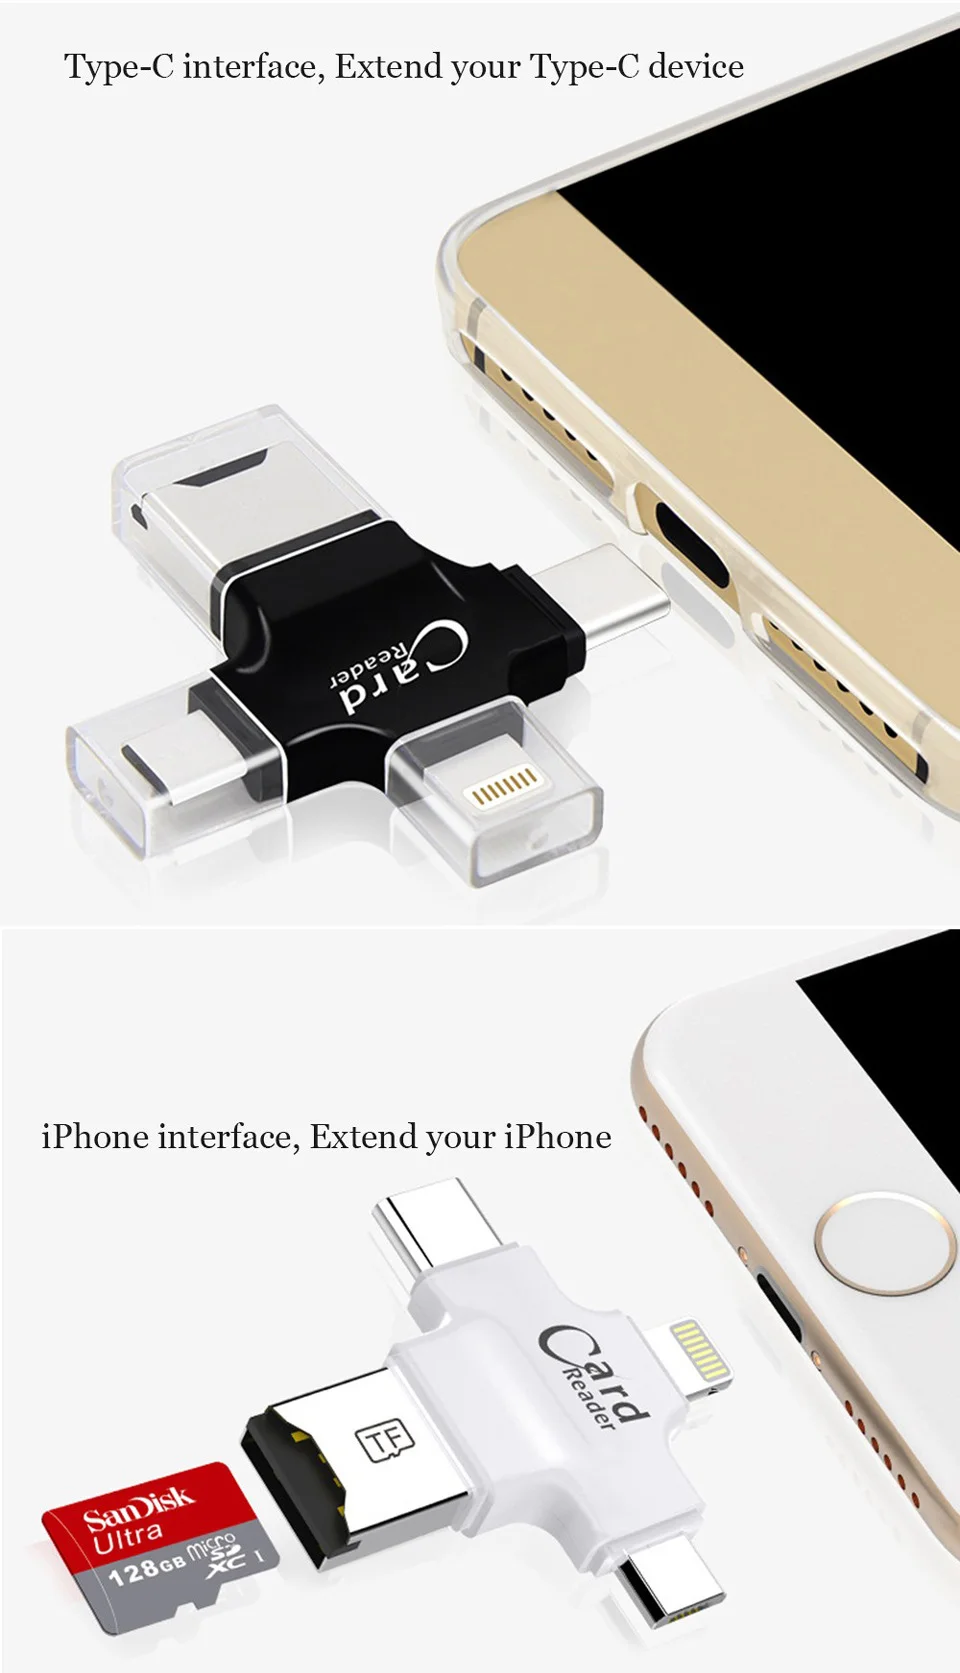 4 в 1 кард-ридер Тип C Micro USB адаптер Micro SD кард-ридер для iPhone/iPad Smart OTG-белый цвет